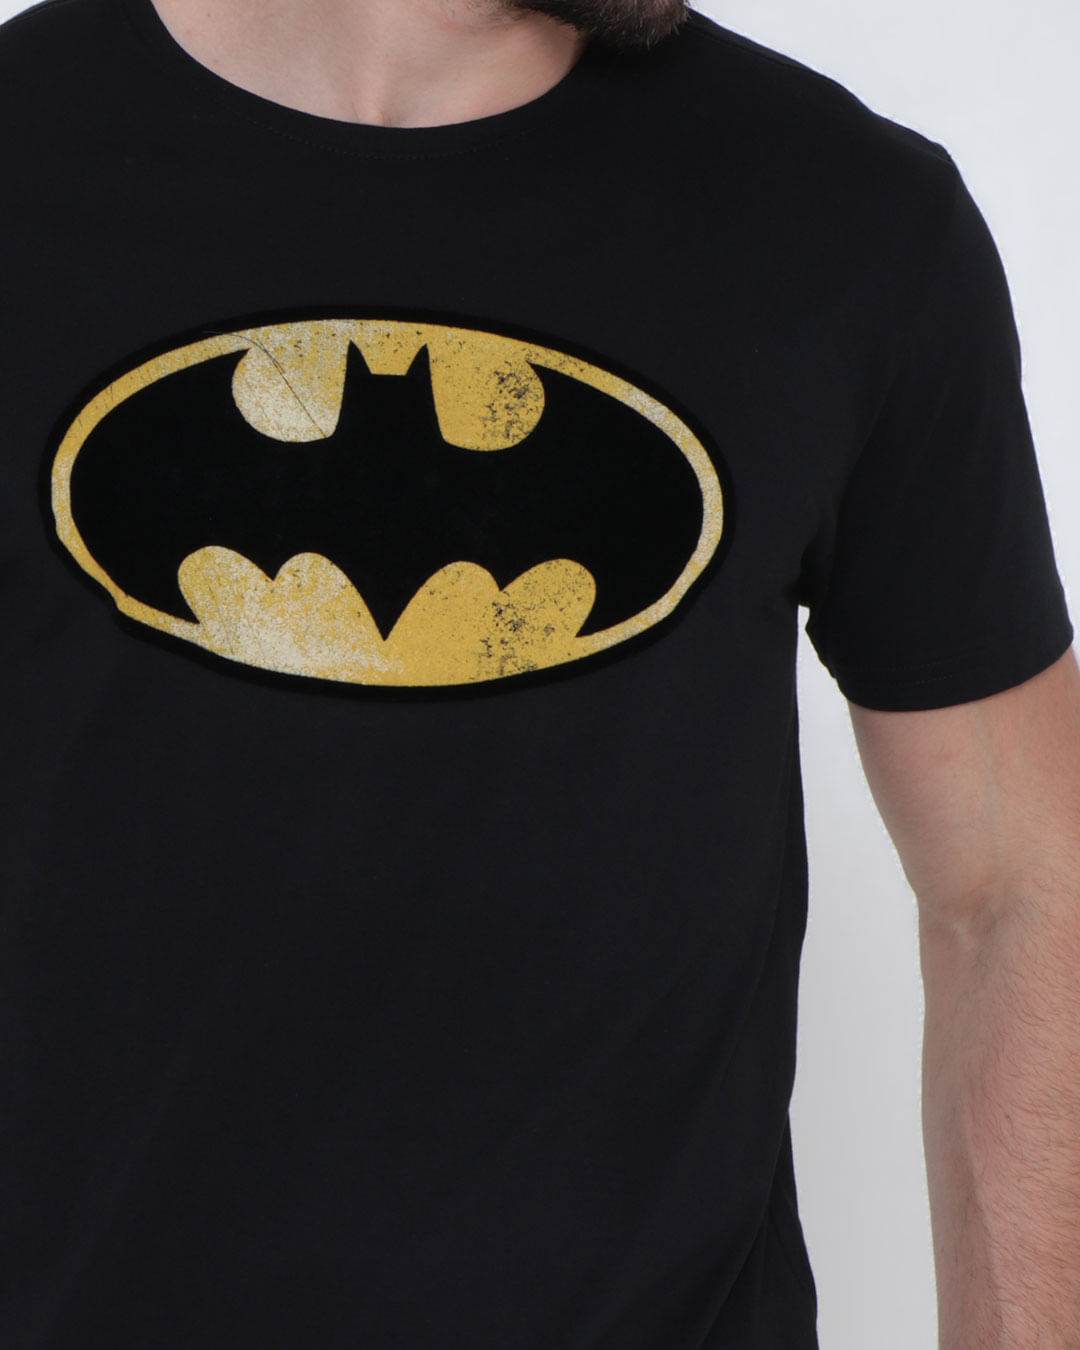 Camiseta-Masculina-Batman-Liga-da-Justica-Preta